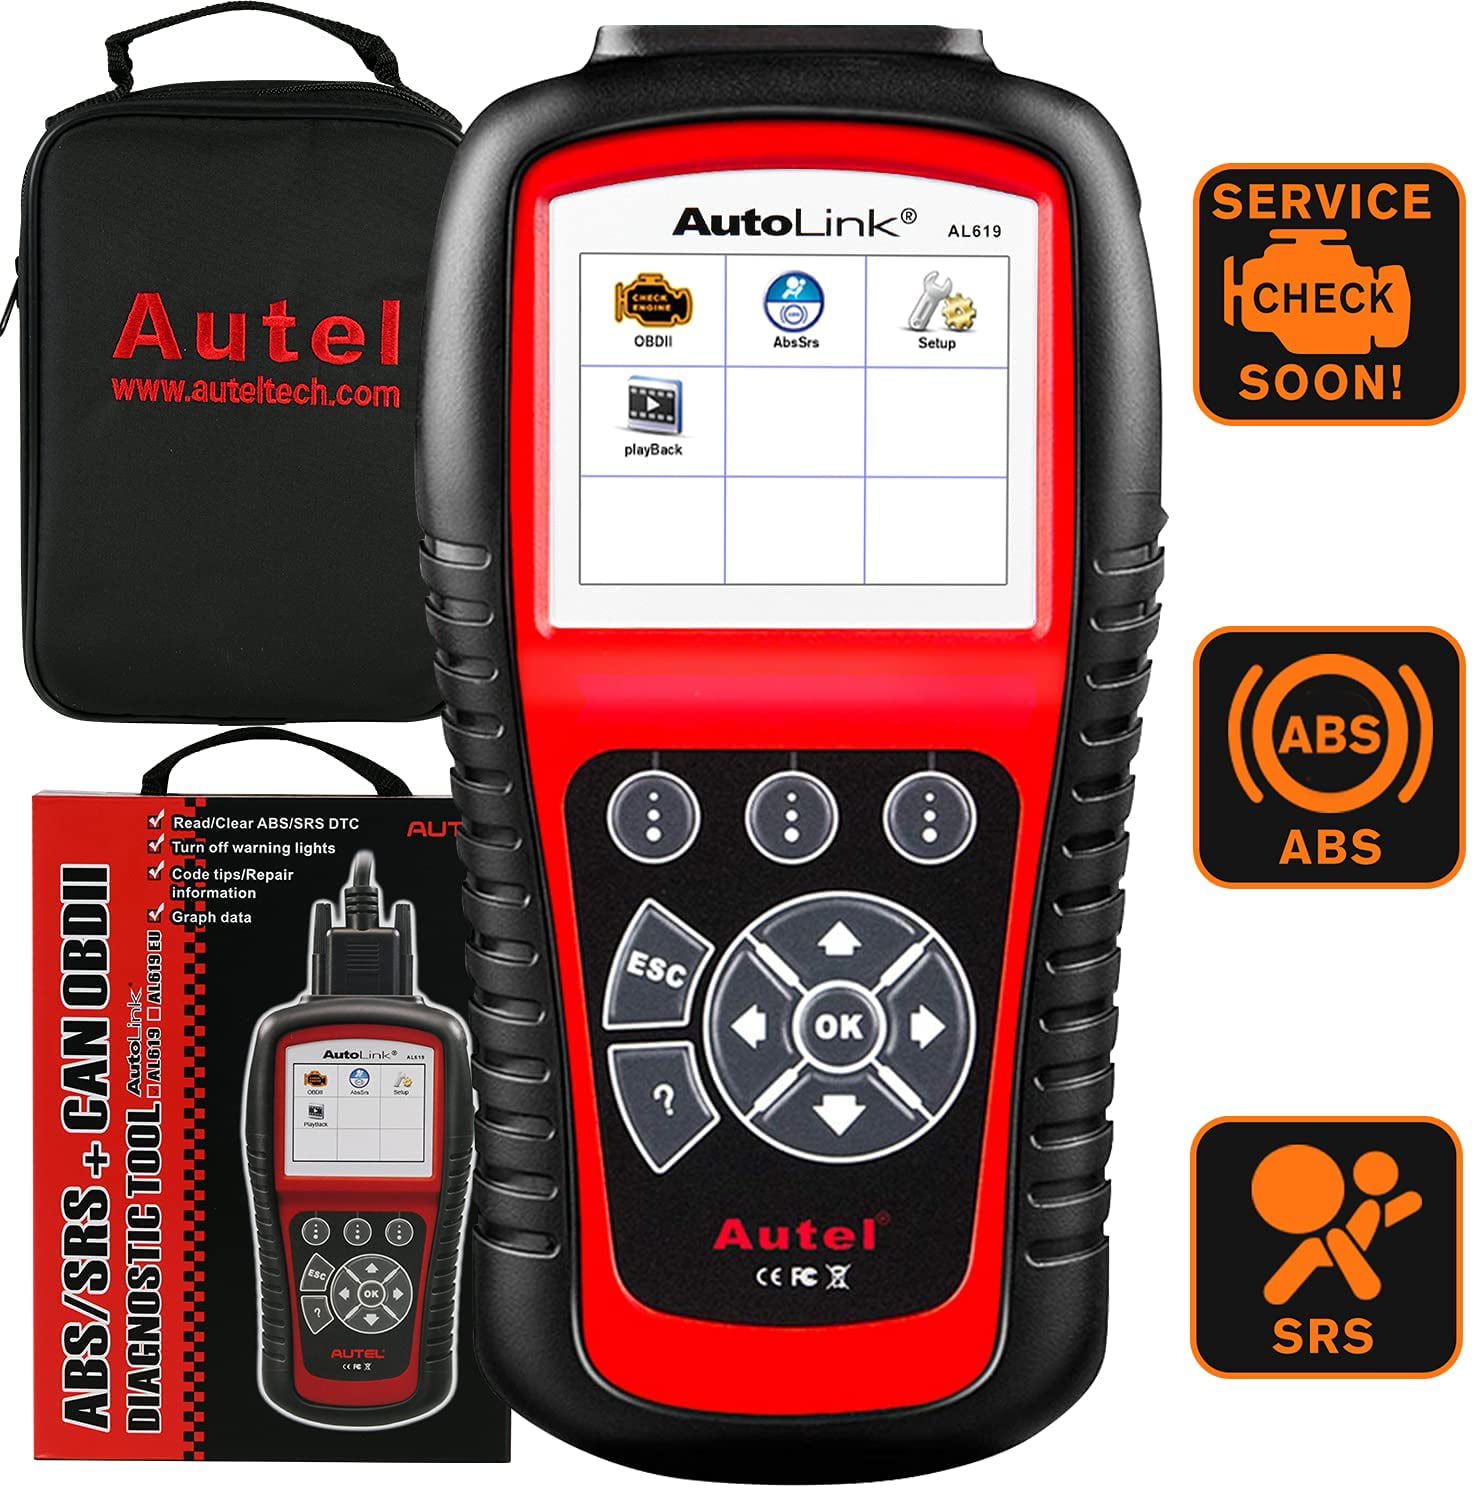 AUTEL MAaxILink ML619 OBD2 Car Code Reader Scan Tool Diagnostic Scanner as AL619 